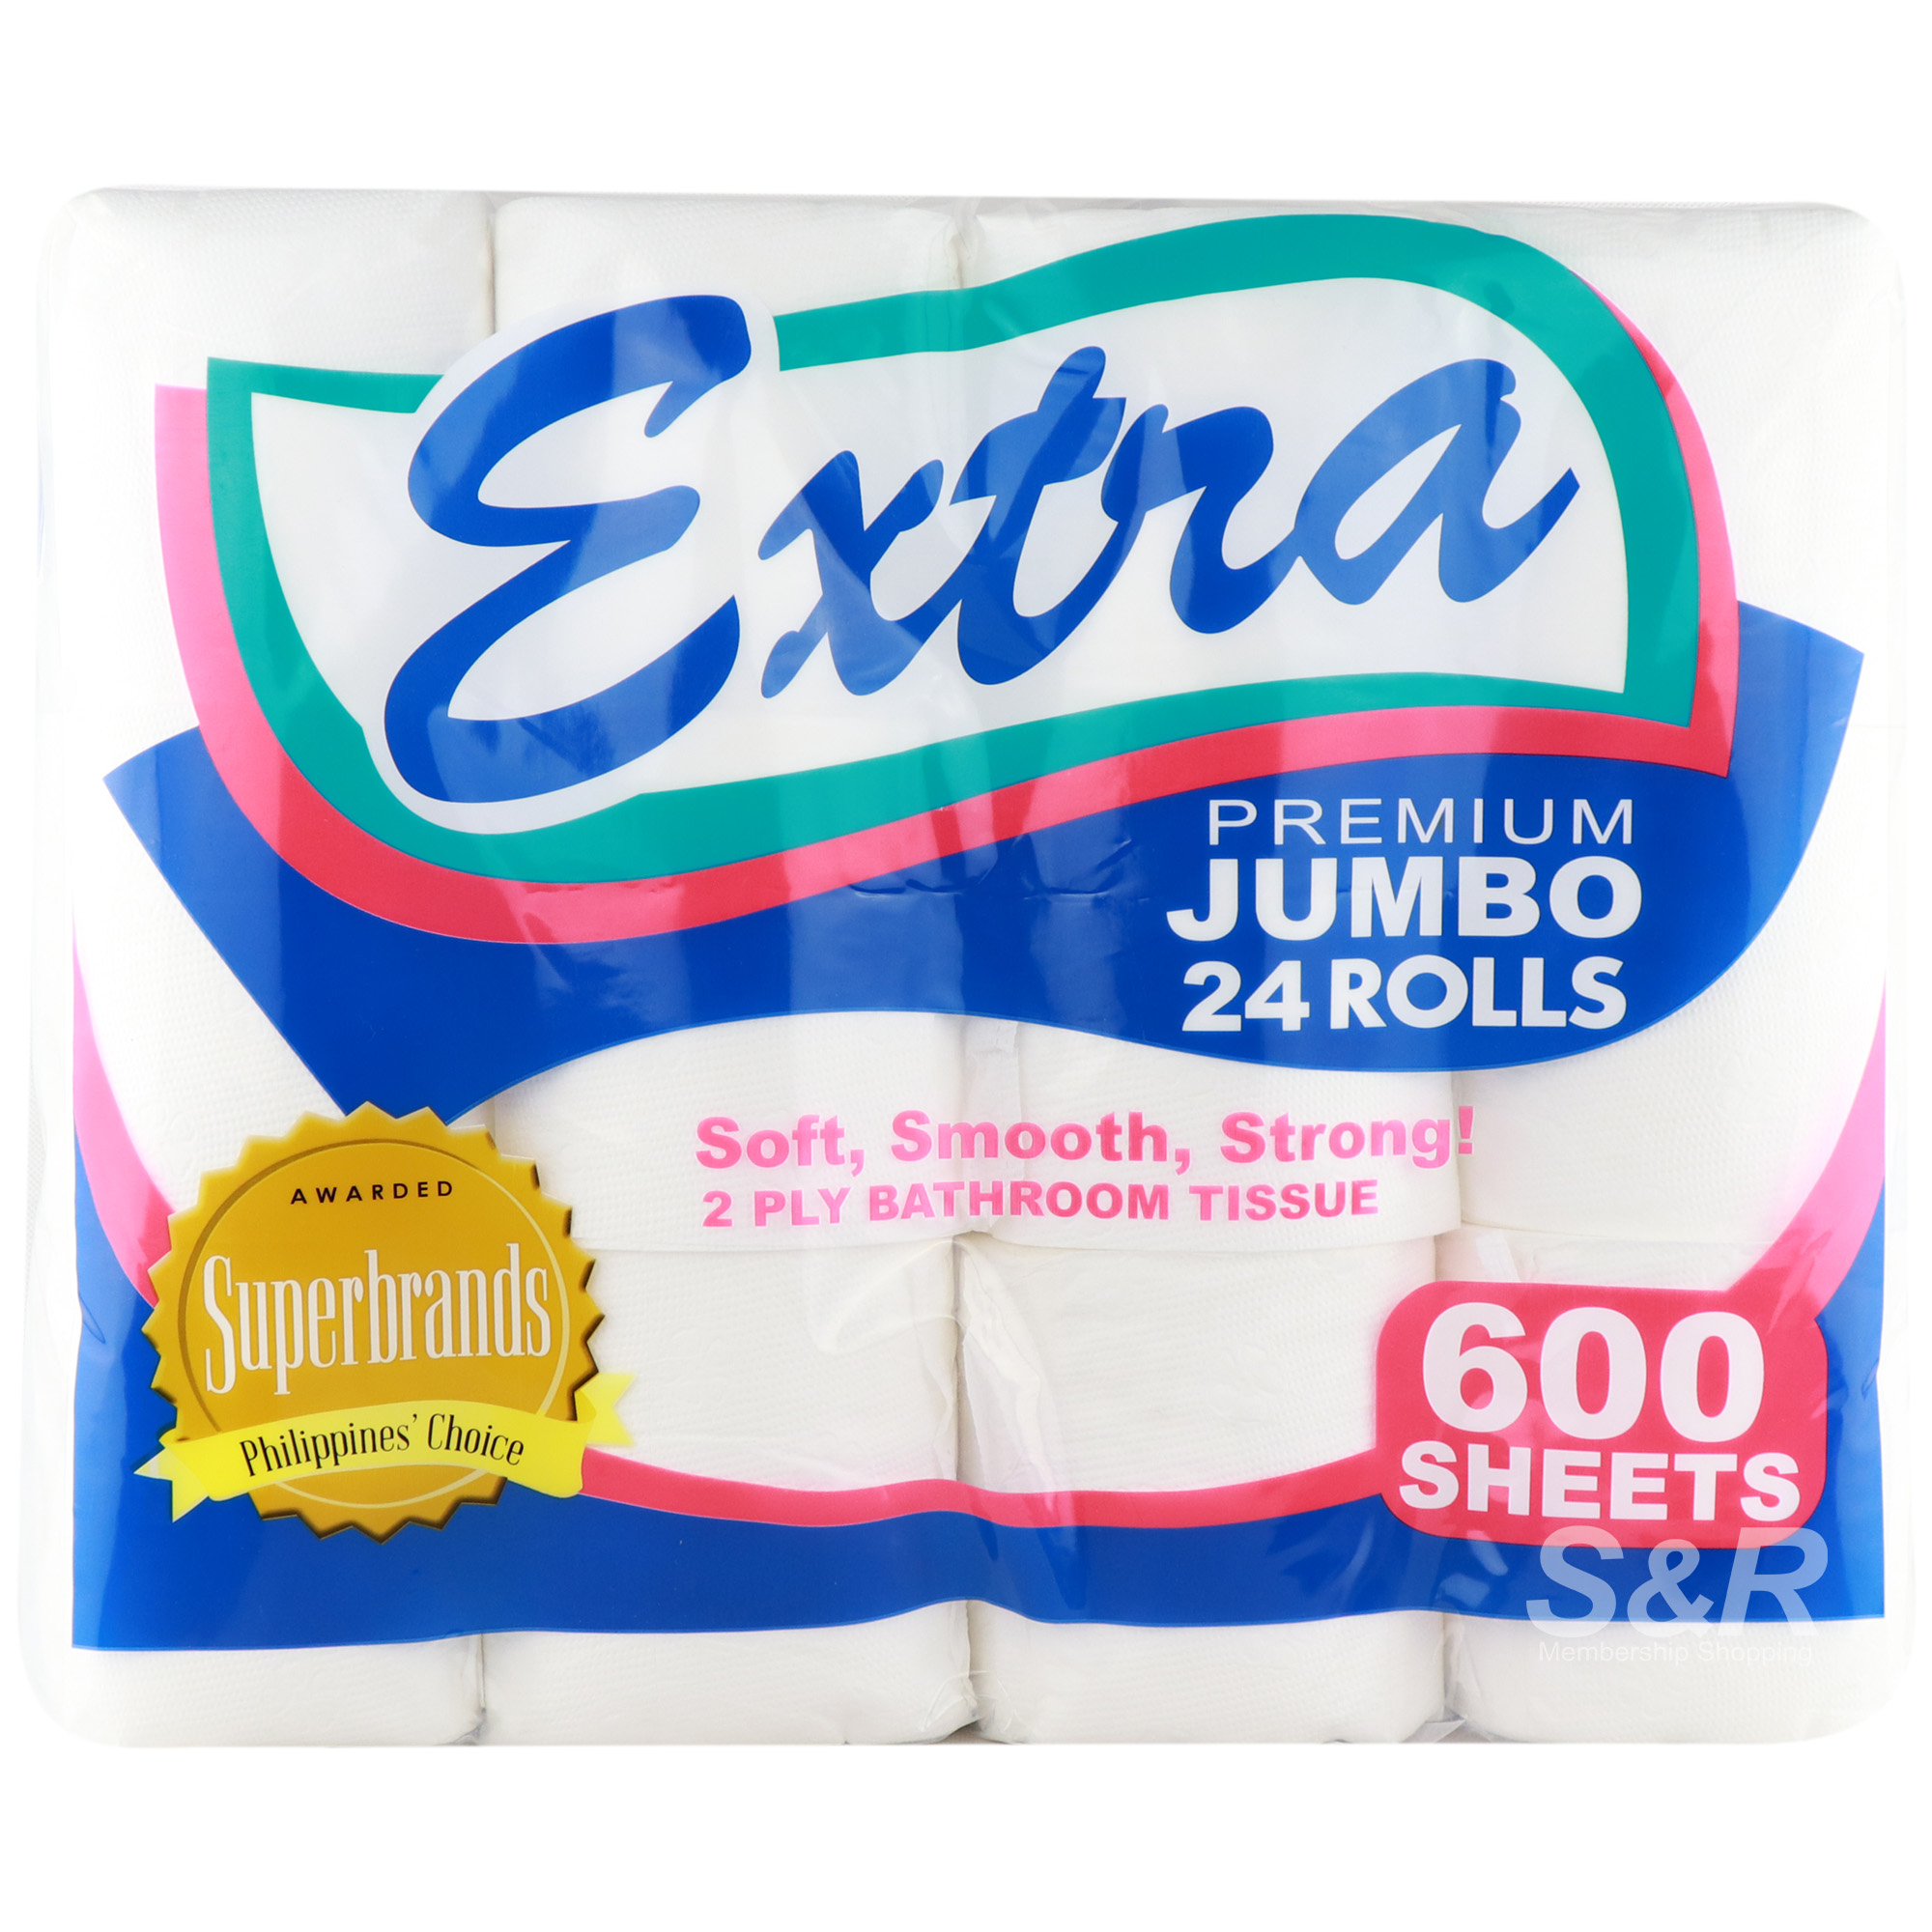 Extra Premium Jumbo Rolls 2 Ply Bathroom Tissue 24 rolls